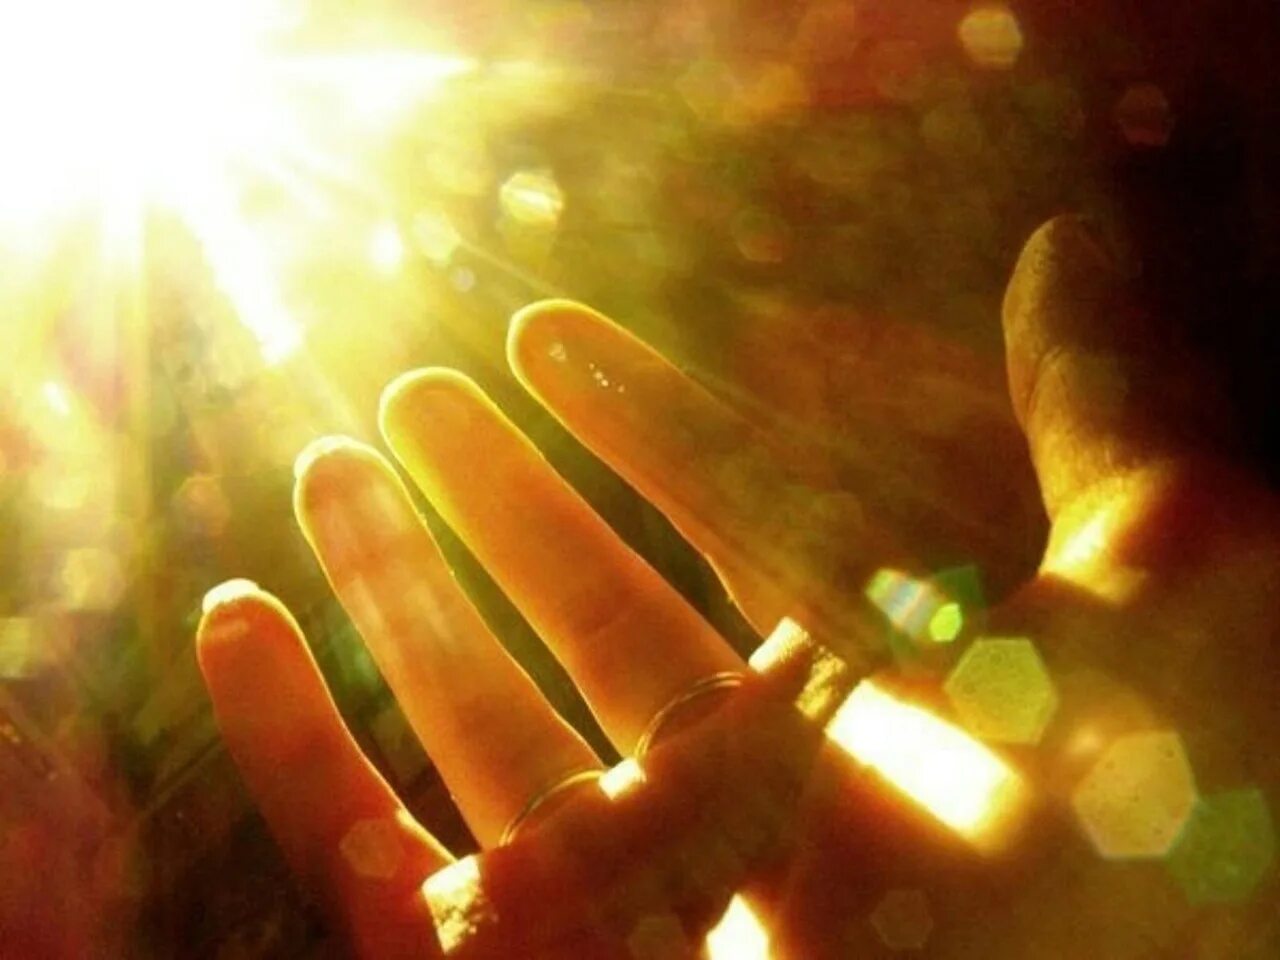 В душе тепло и солнечно. Солнце на ладони. Солнце в руках. Тепло человеческой души. Солнечный Луч на ладони.